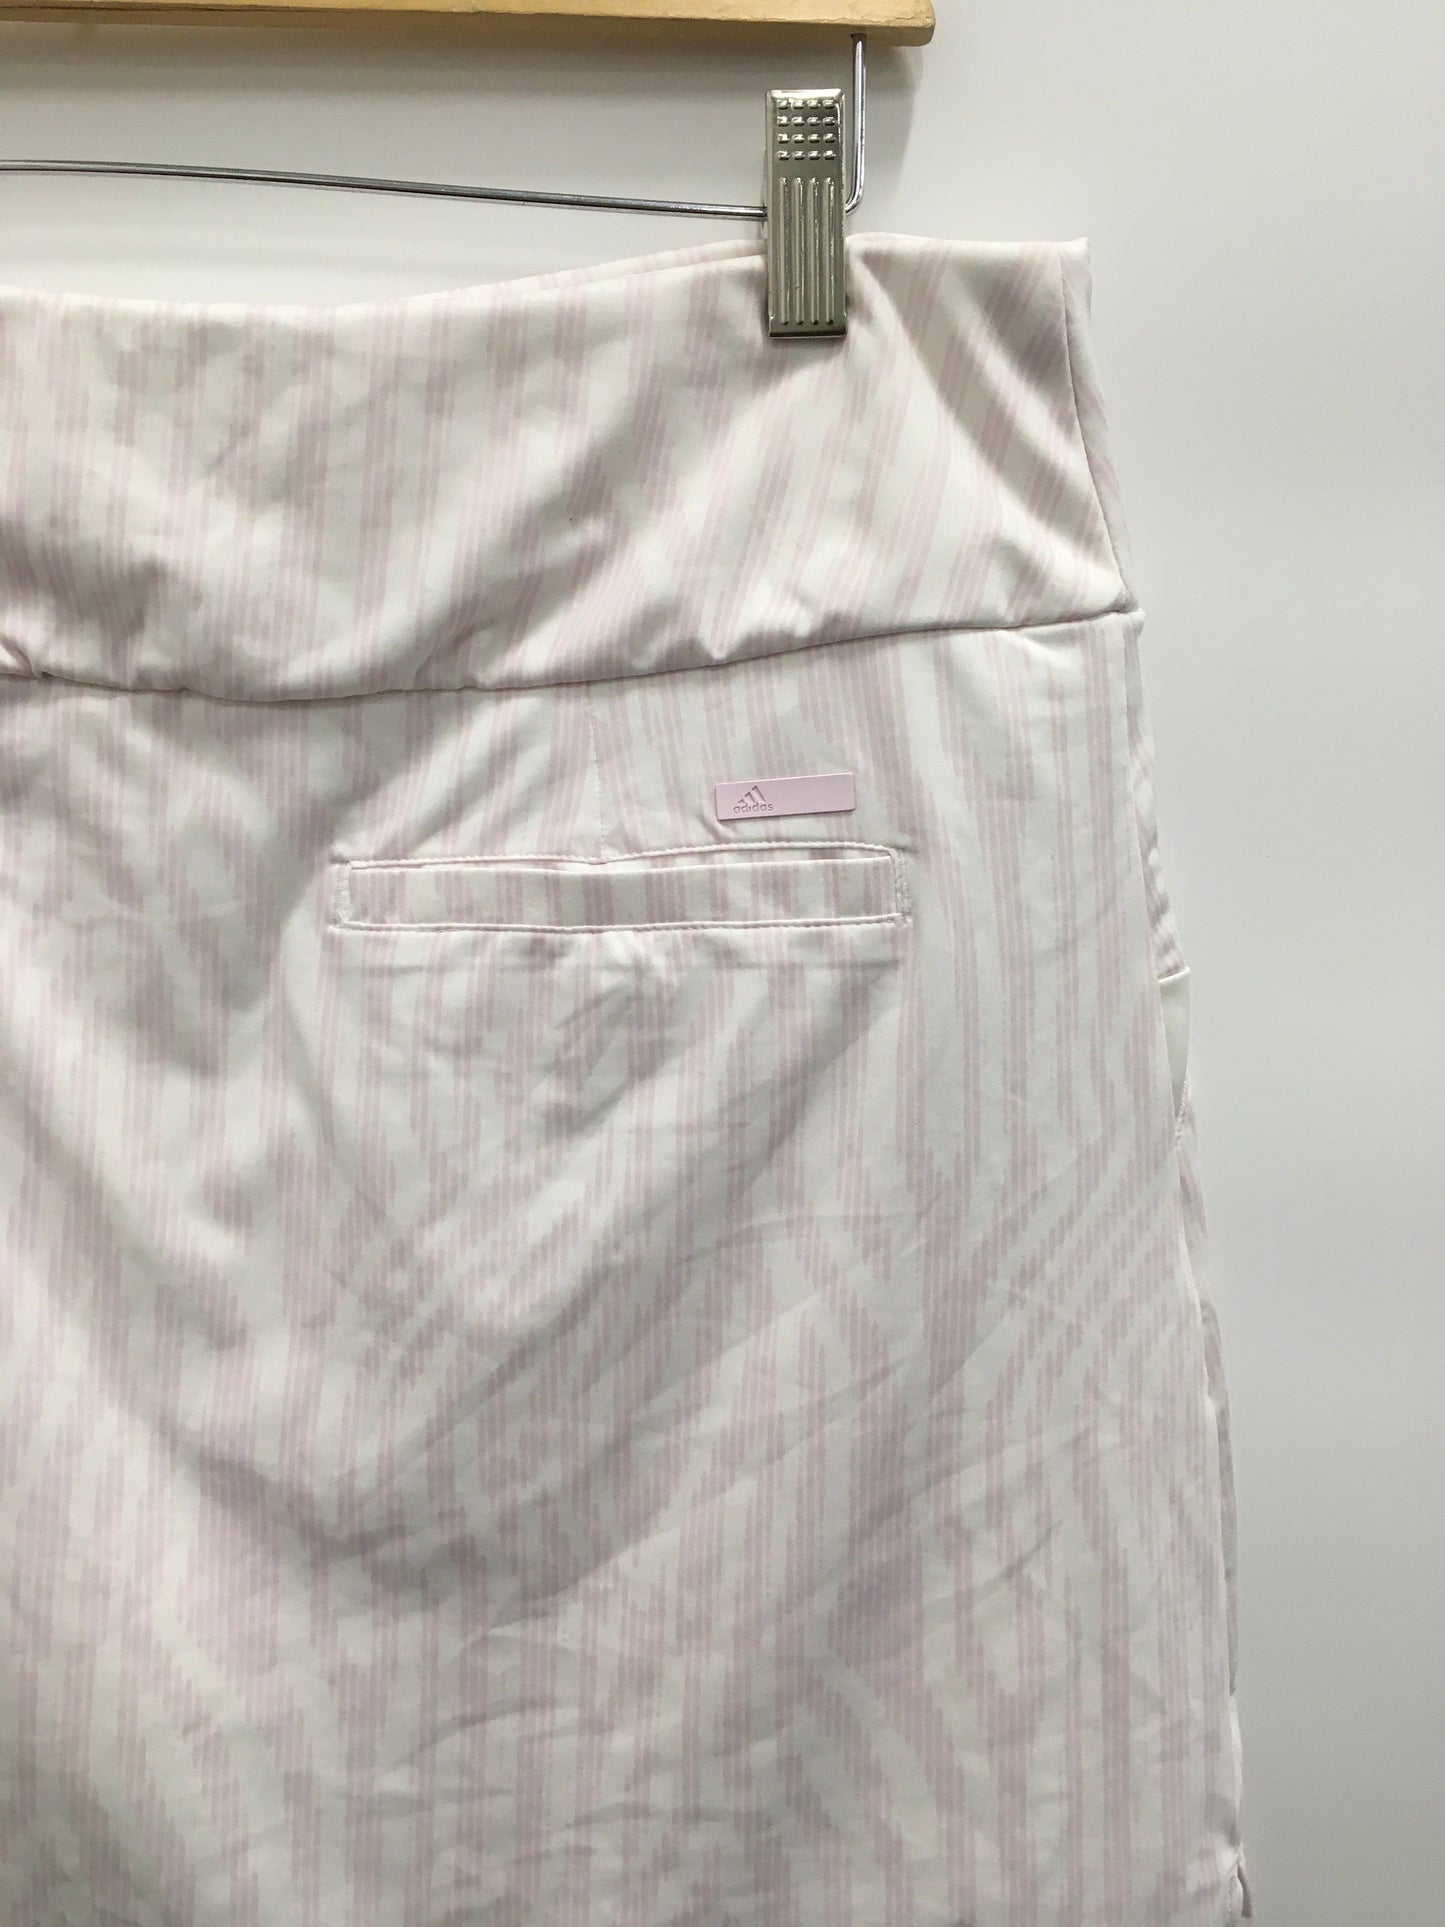 Athletic Skirt Skort By Adidas  Size: L